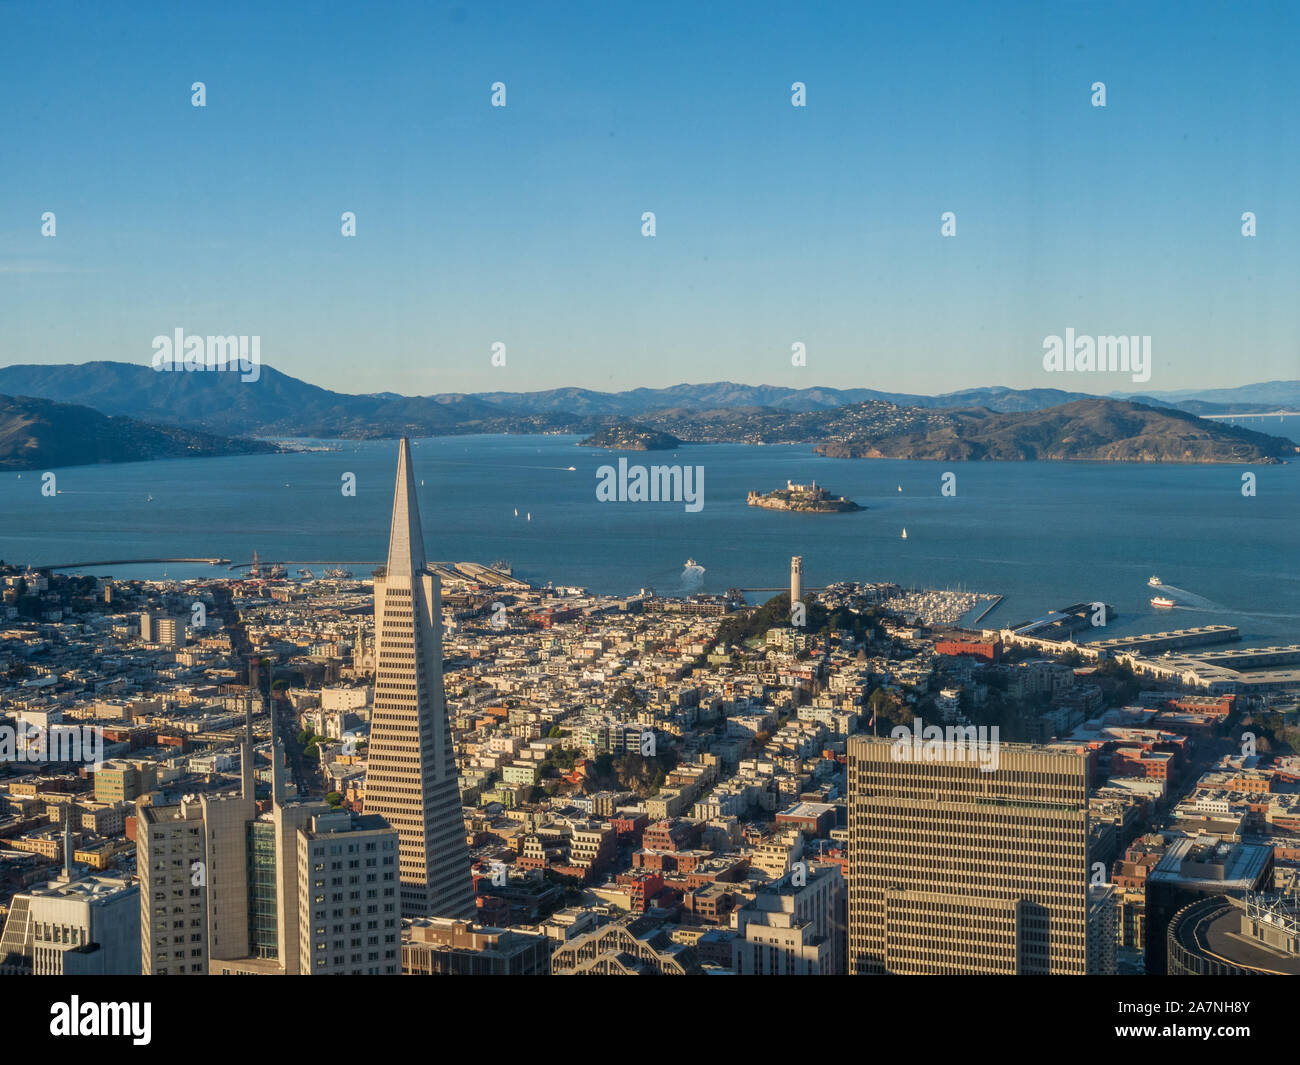 View of Transamerica Pyramid, Alcatraz, and San Francisco Bay from tallest vantage point in city Stock Photo